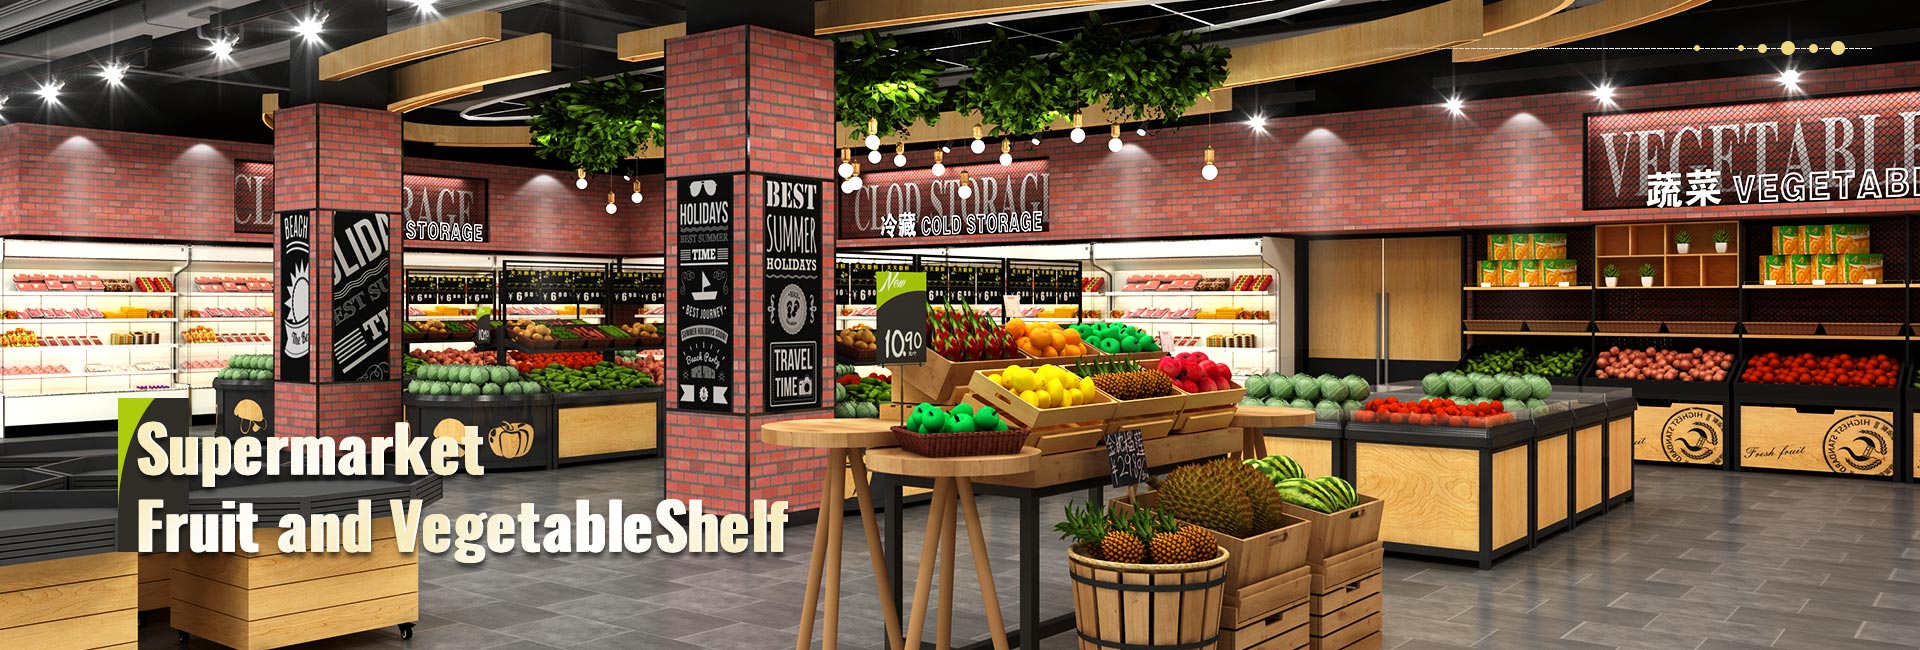 Supermarket Fruit and VegetableShelf